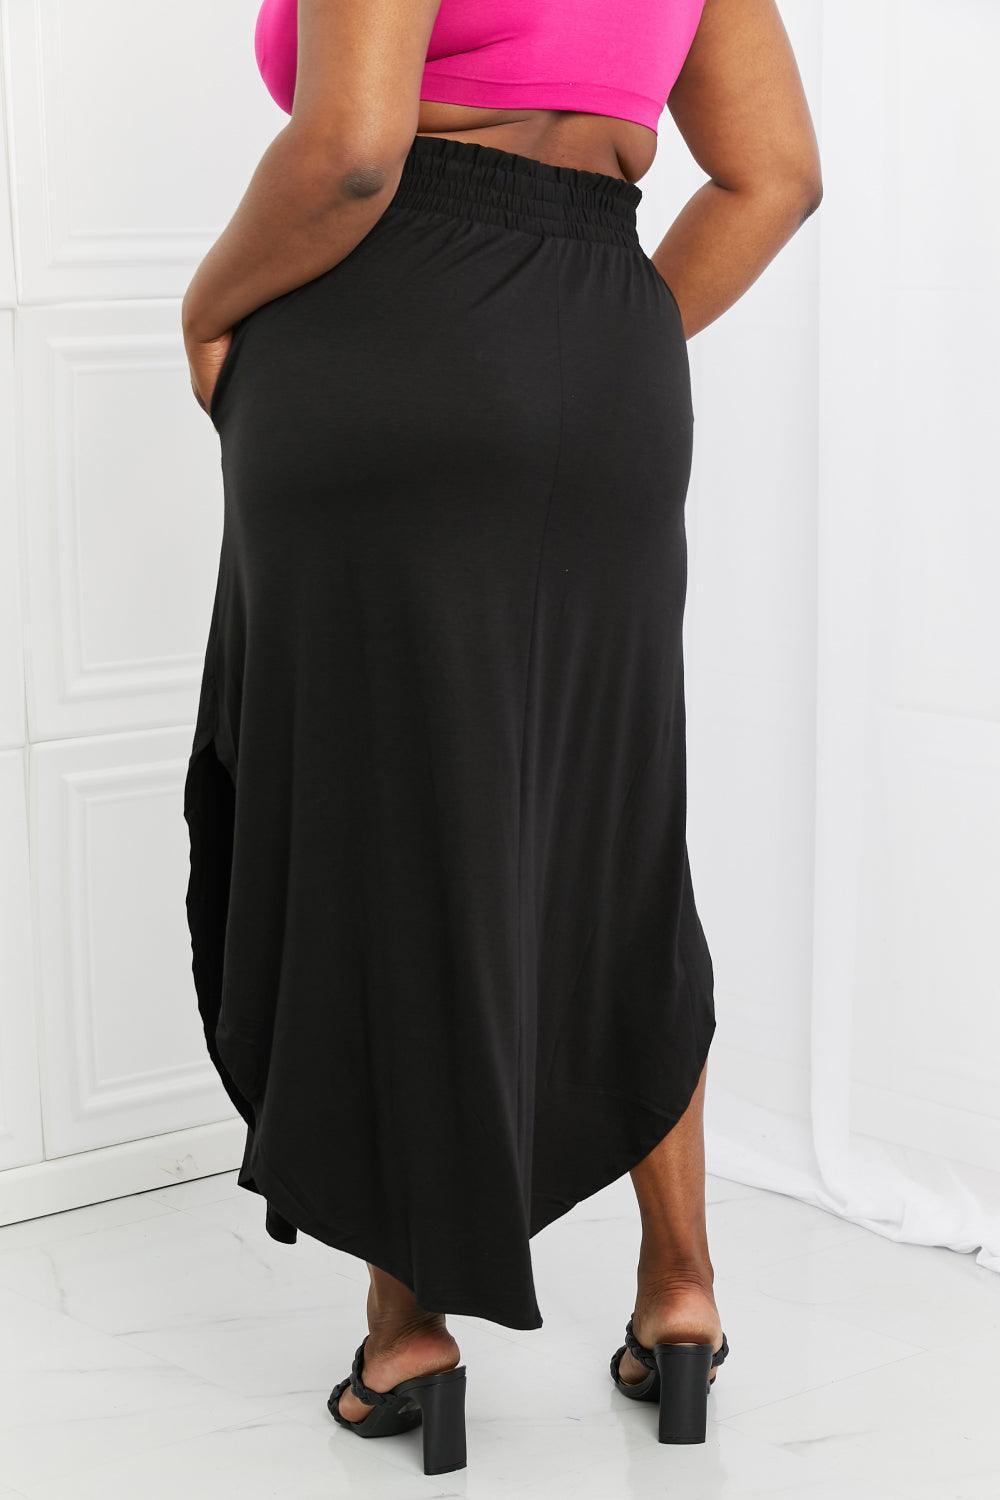 Love Yourself Slit Plus Size Black Maxi Skirt - MXSTUDIO.COM